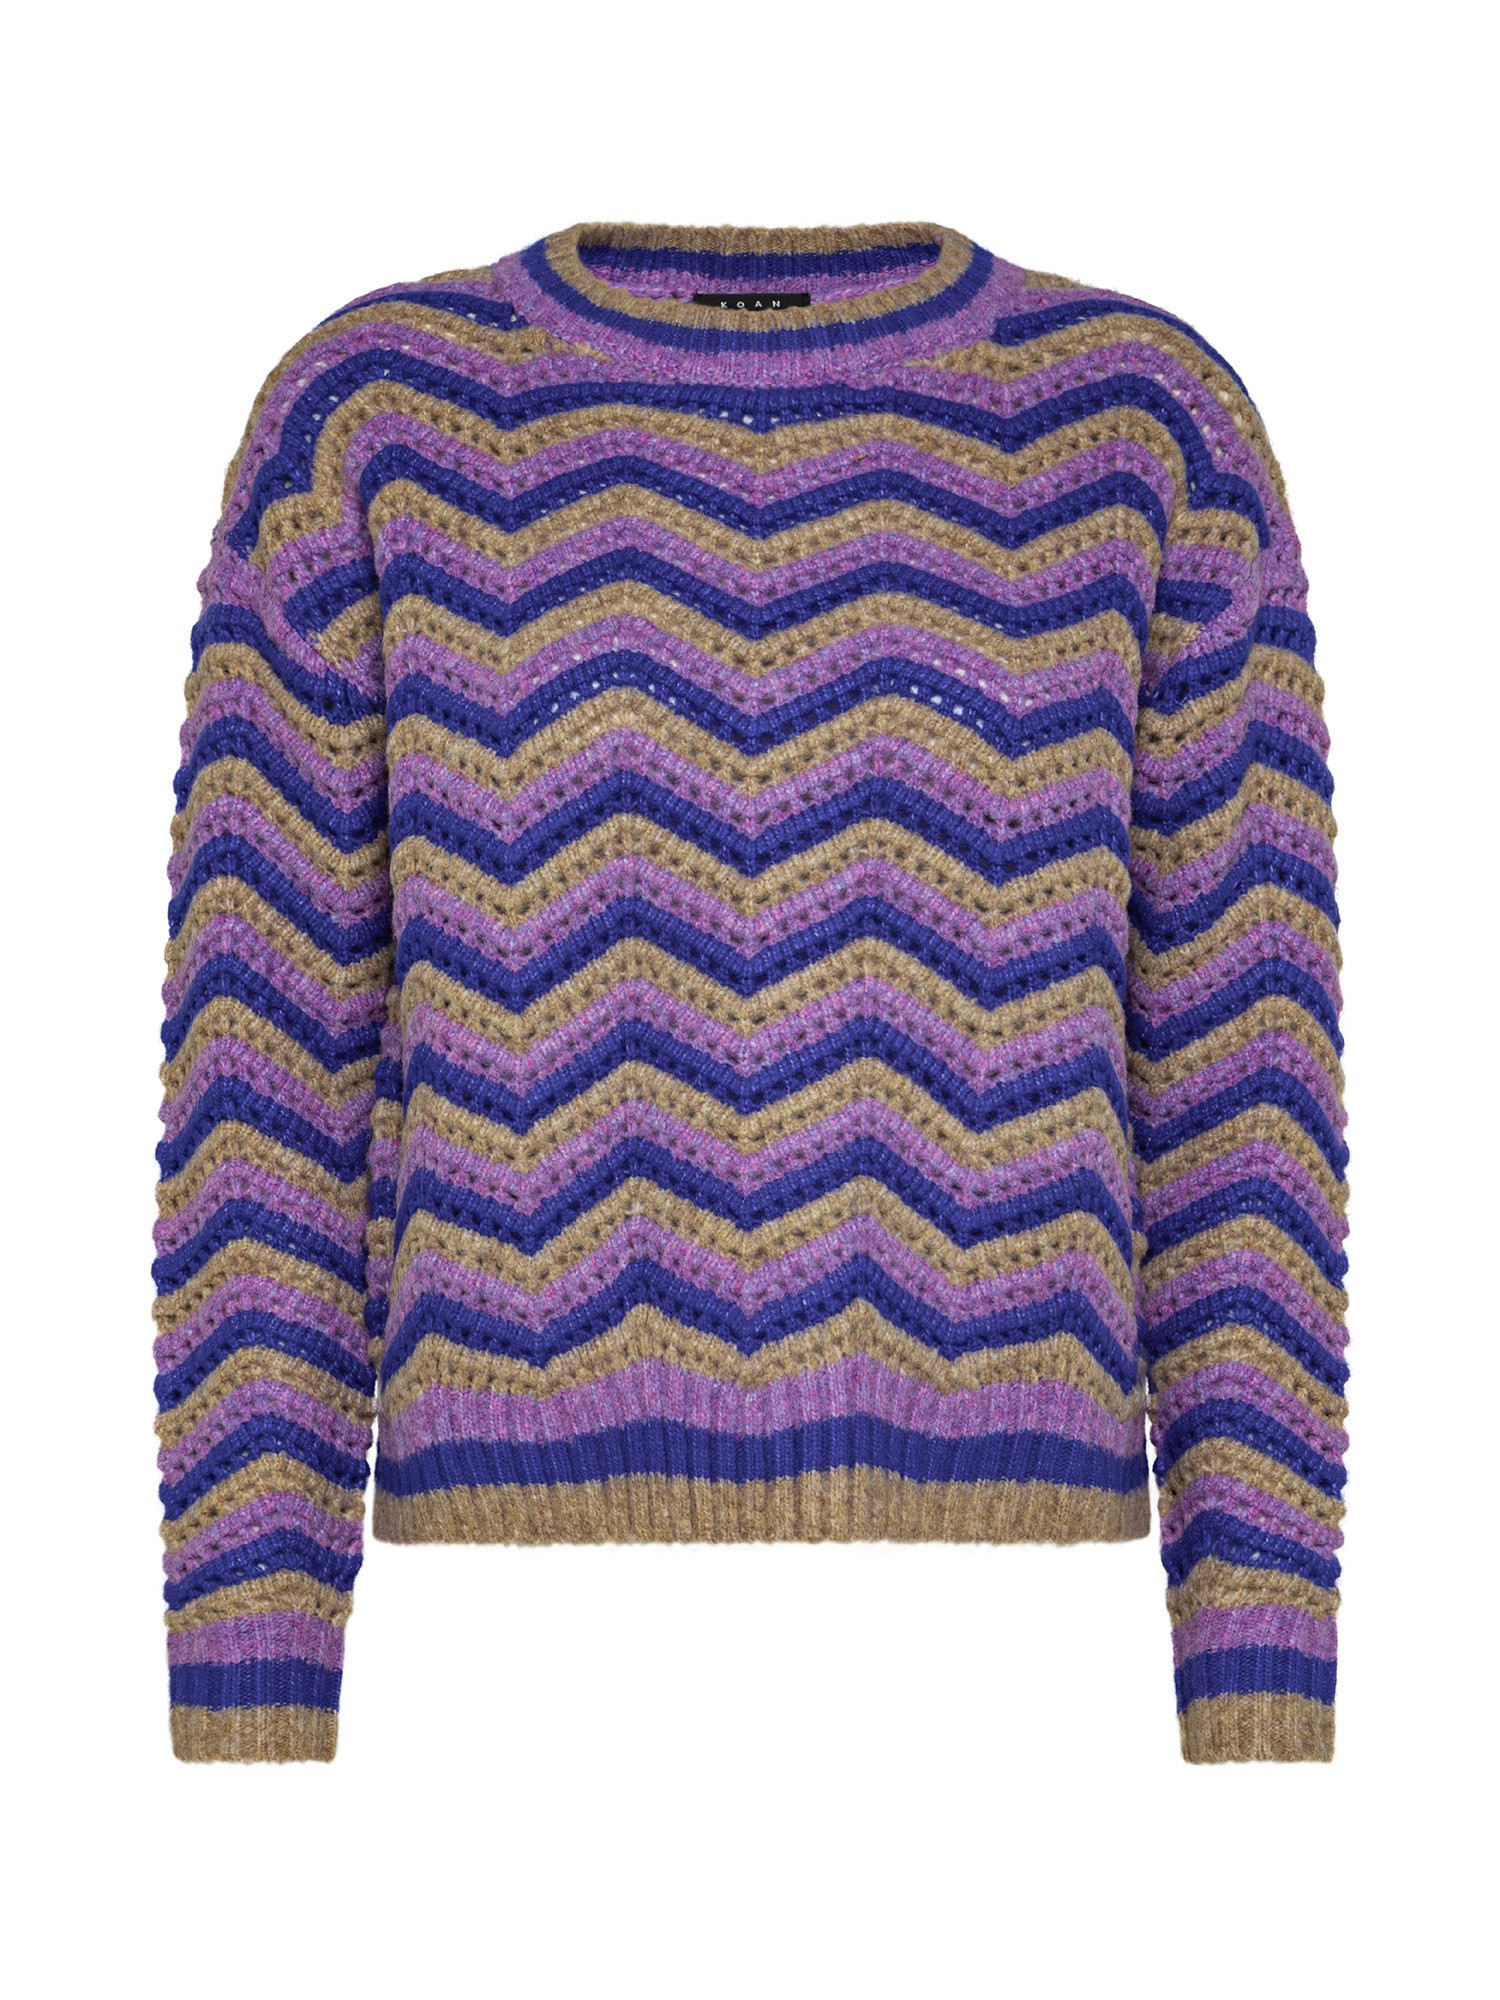 Koan - Patterned crewneck pullover, Multicolor, large image number 0